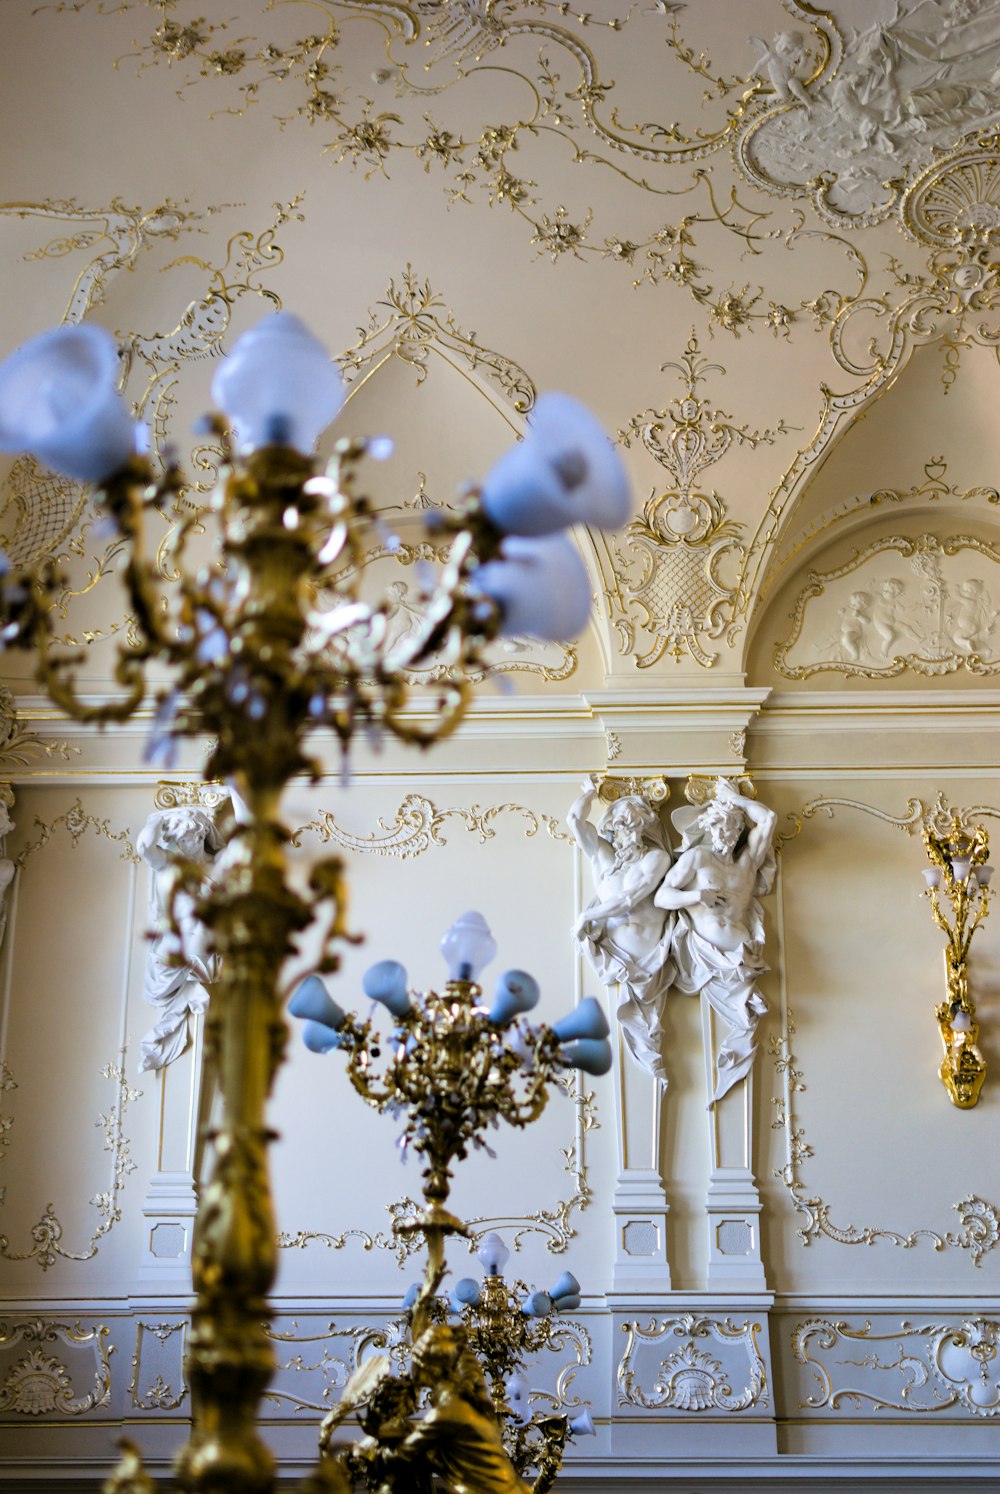 gold and blue floral uplight chandelier